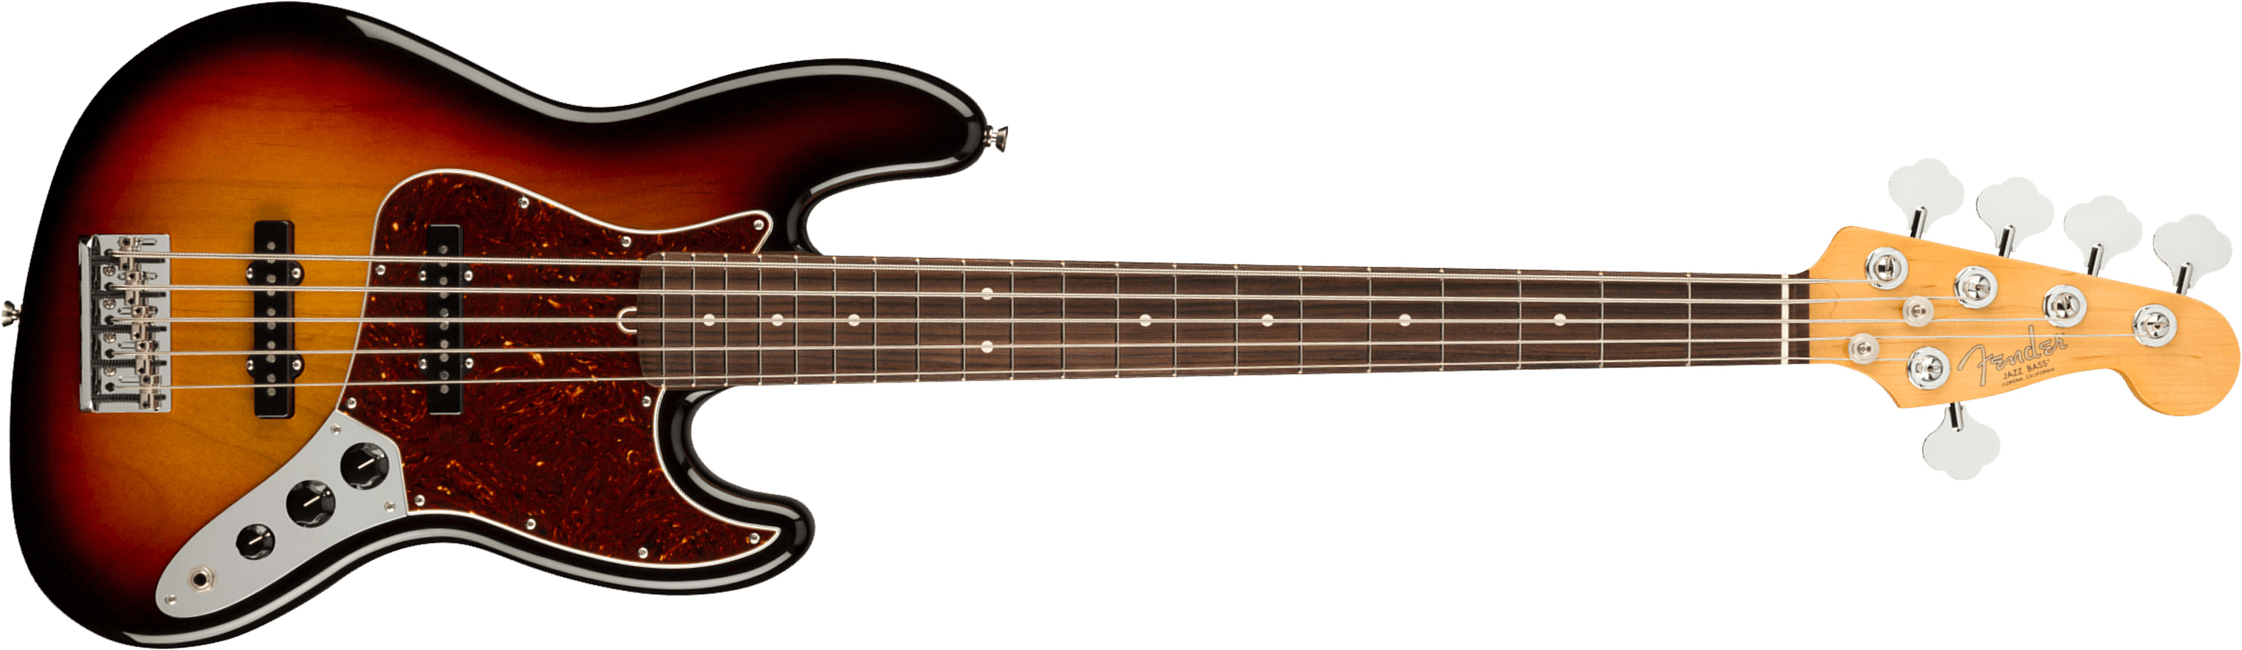 Fender Jazz Bass V American Professional Ii Usa 5-cordes Rw - 3-color Sunburst - Solid body elektrische bas - Main picture